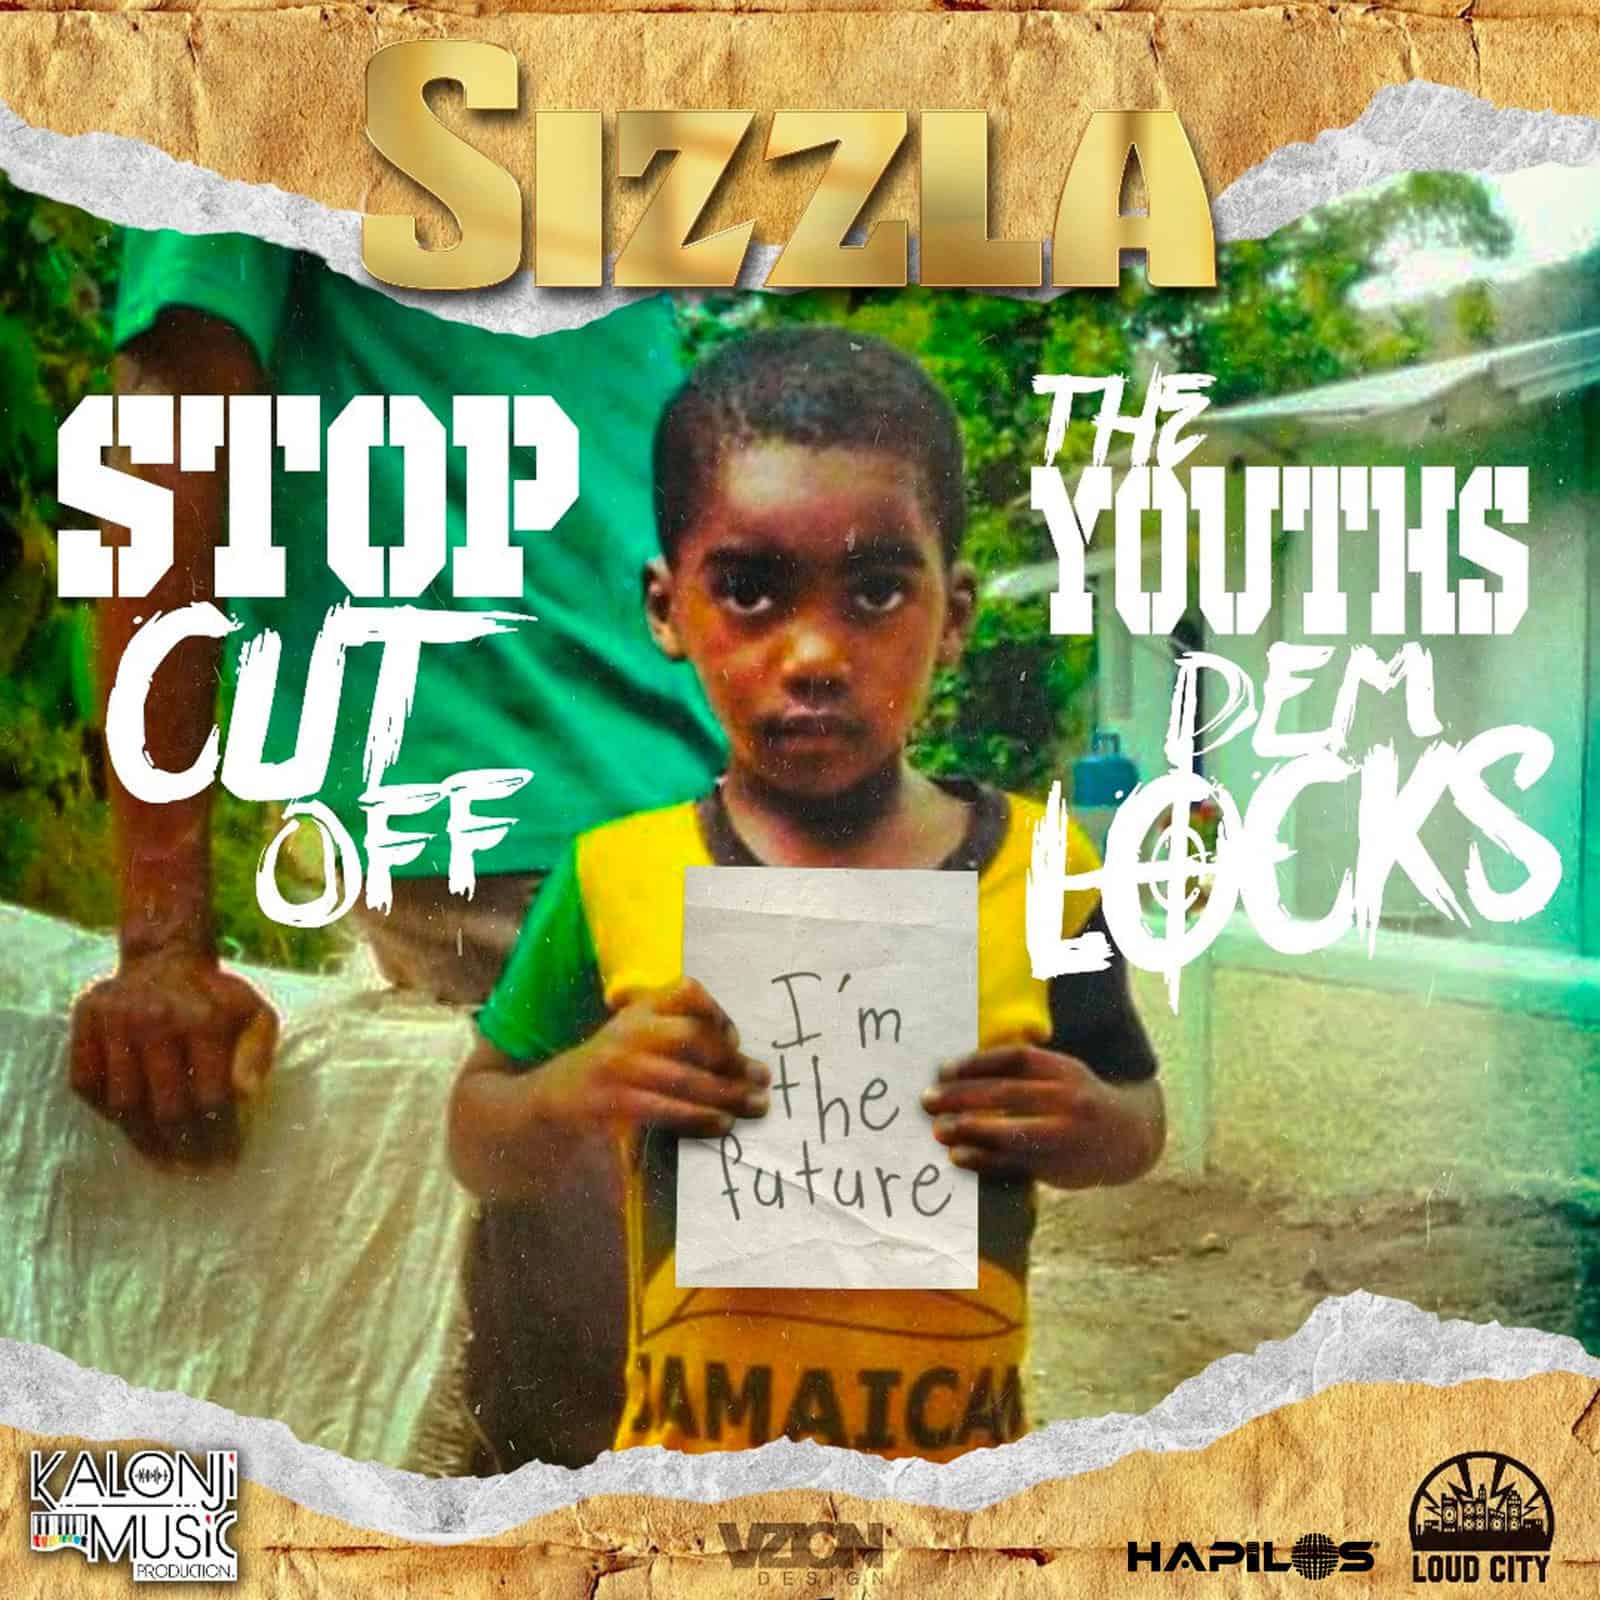 Sizzla: "Stop Cut off The Youths Dem Locks"